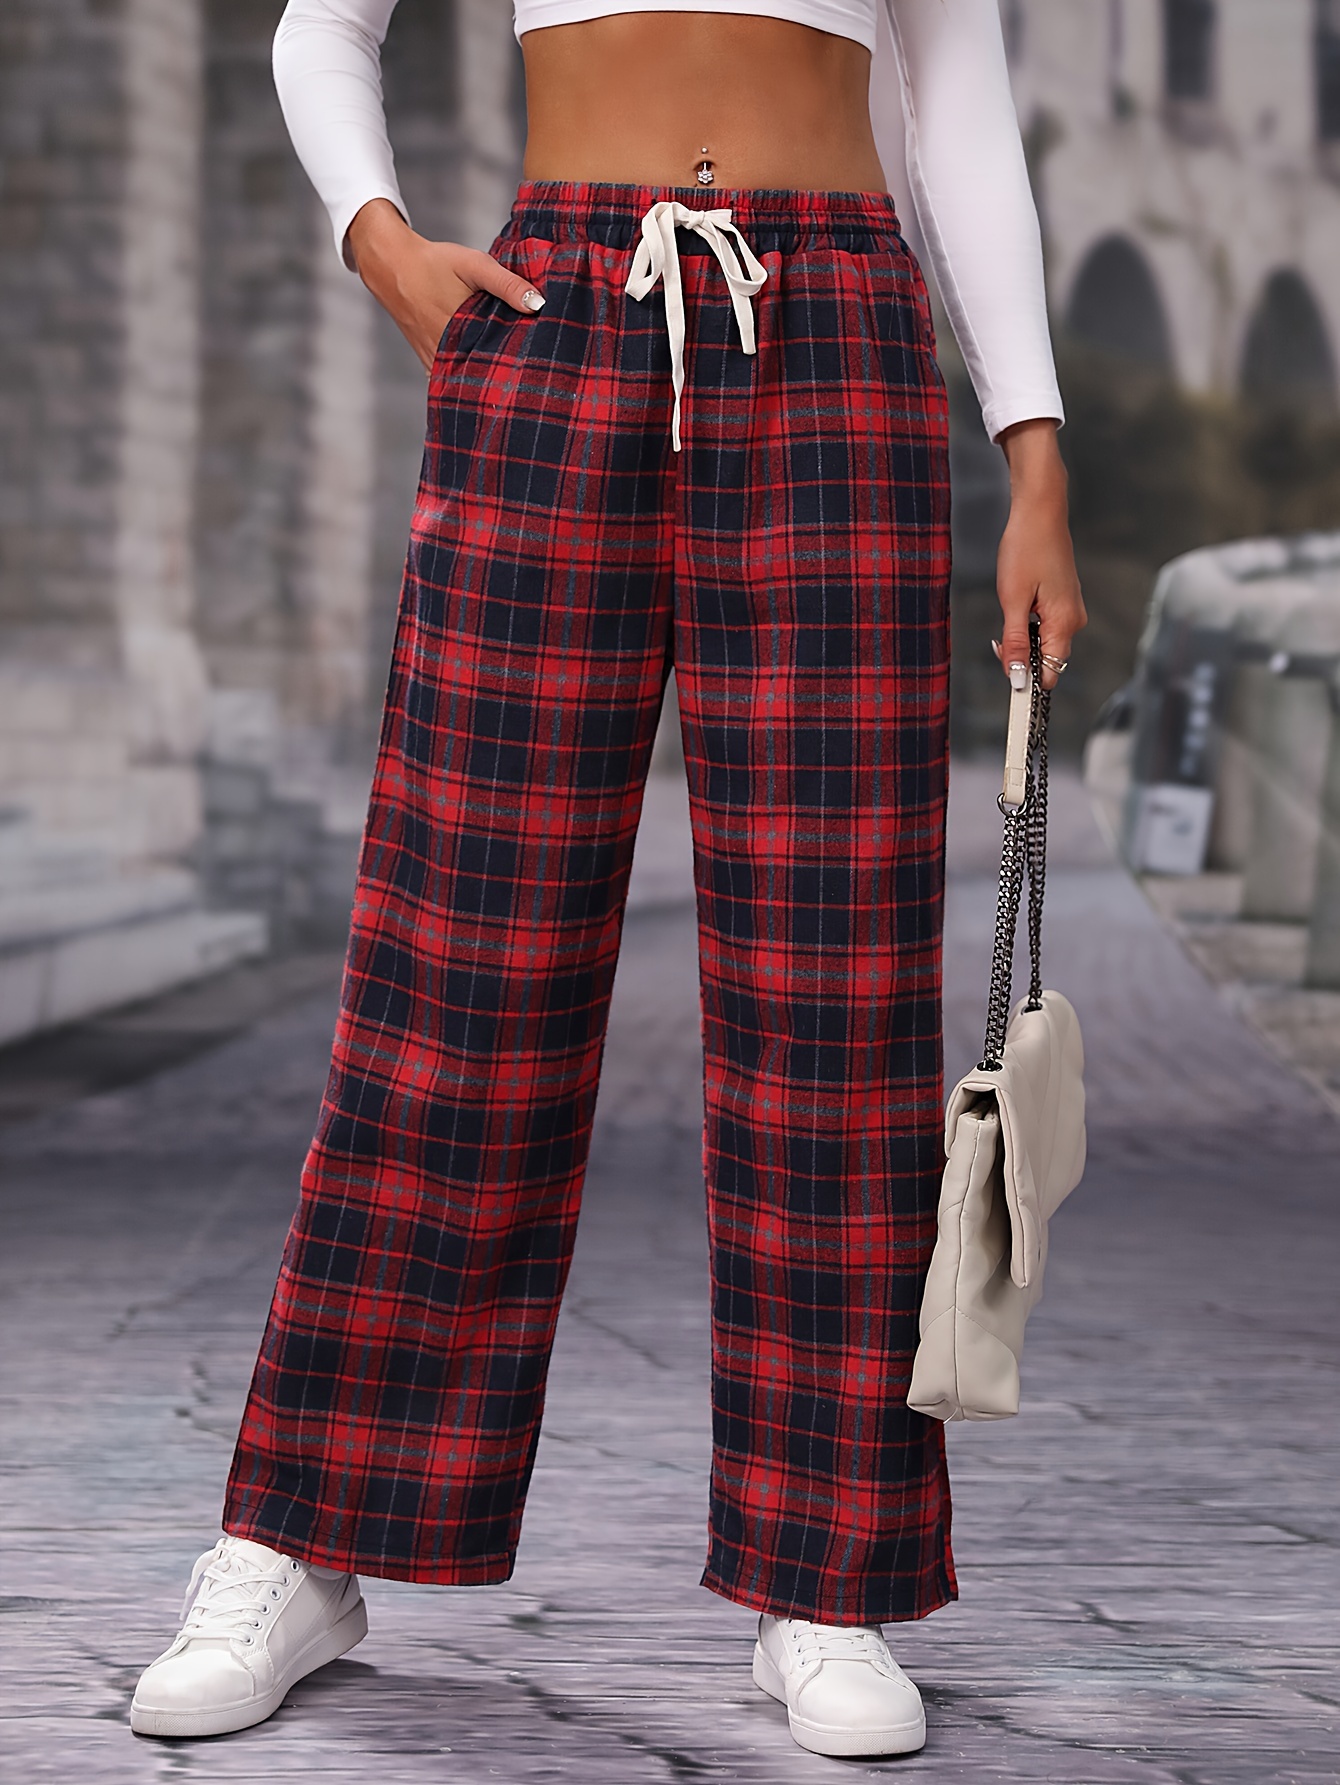 Syiwidii vintage plaid pants elastic waist pants women high waist